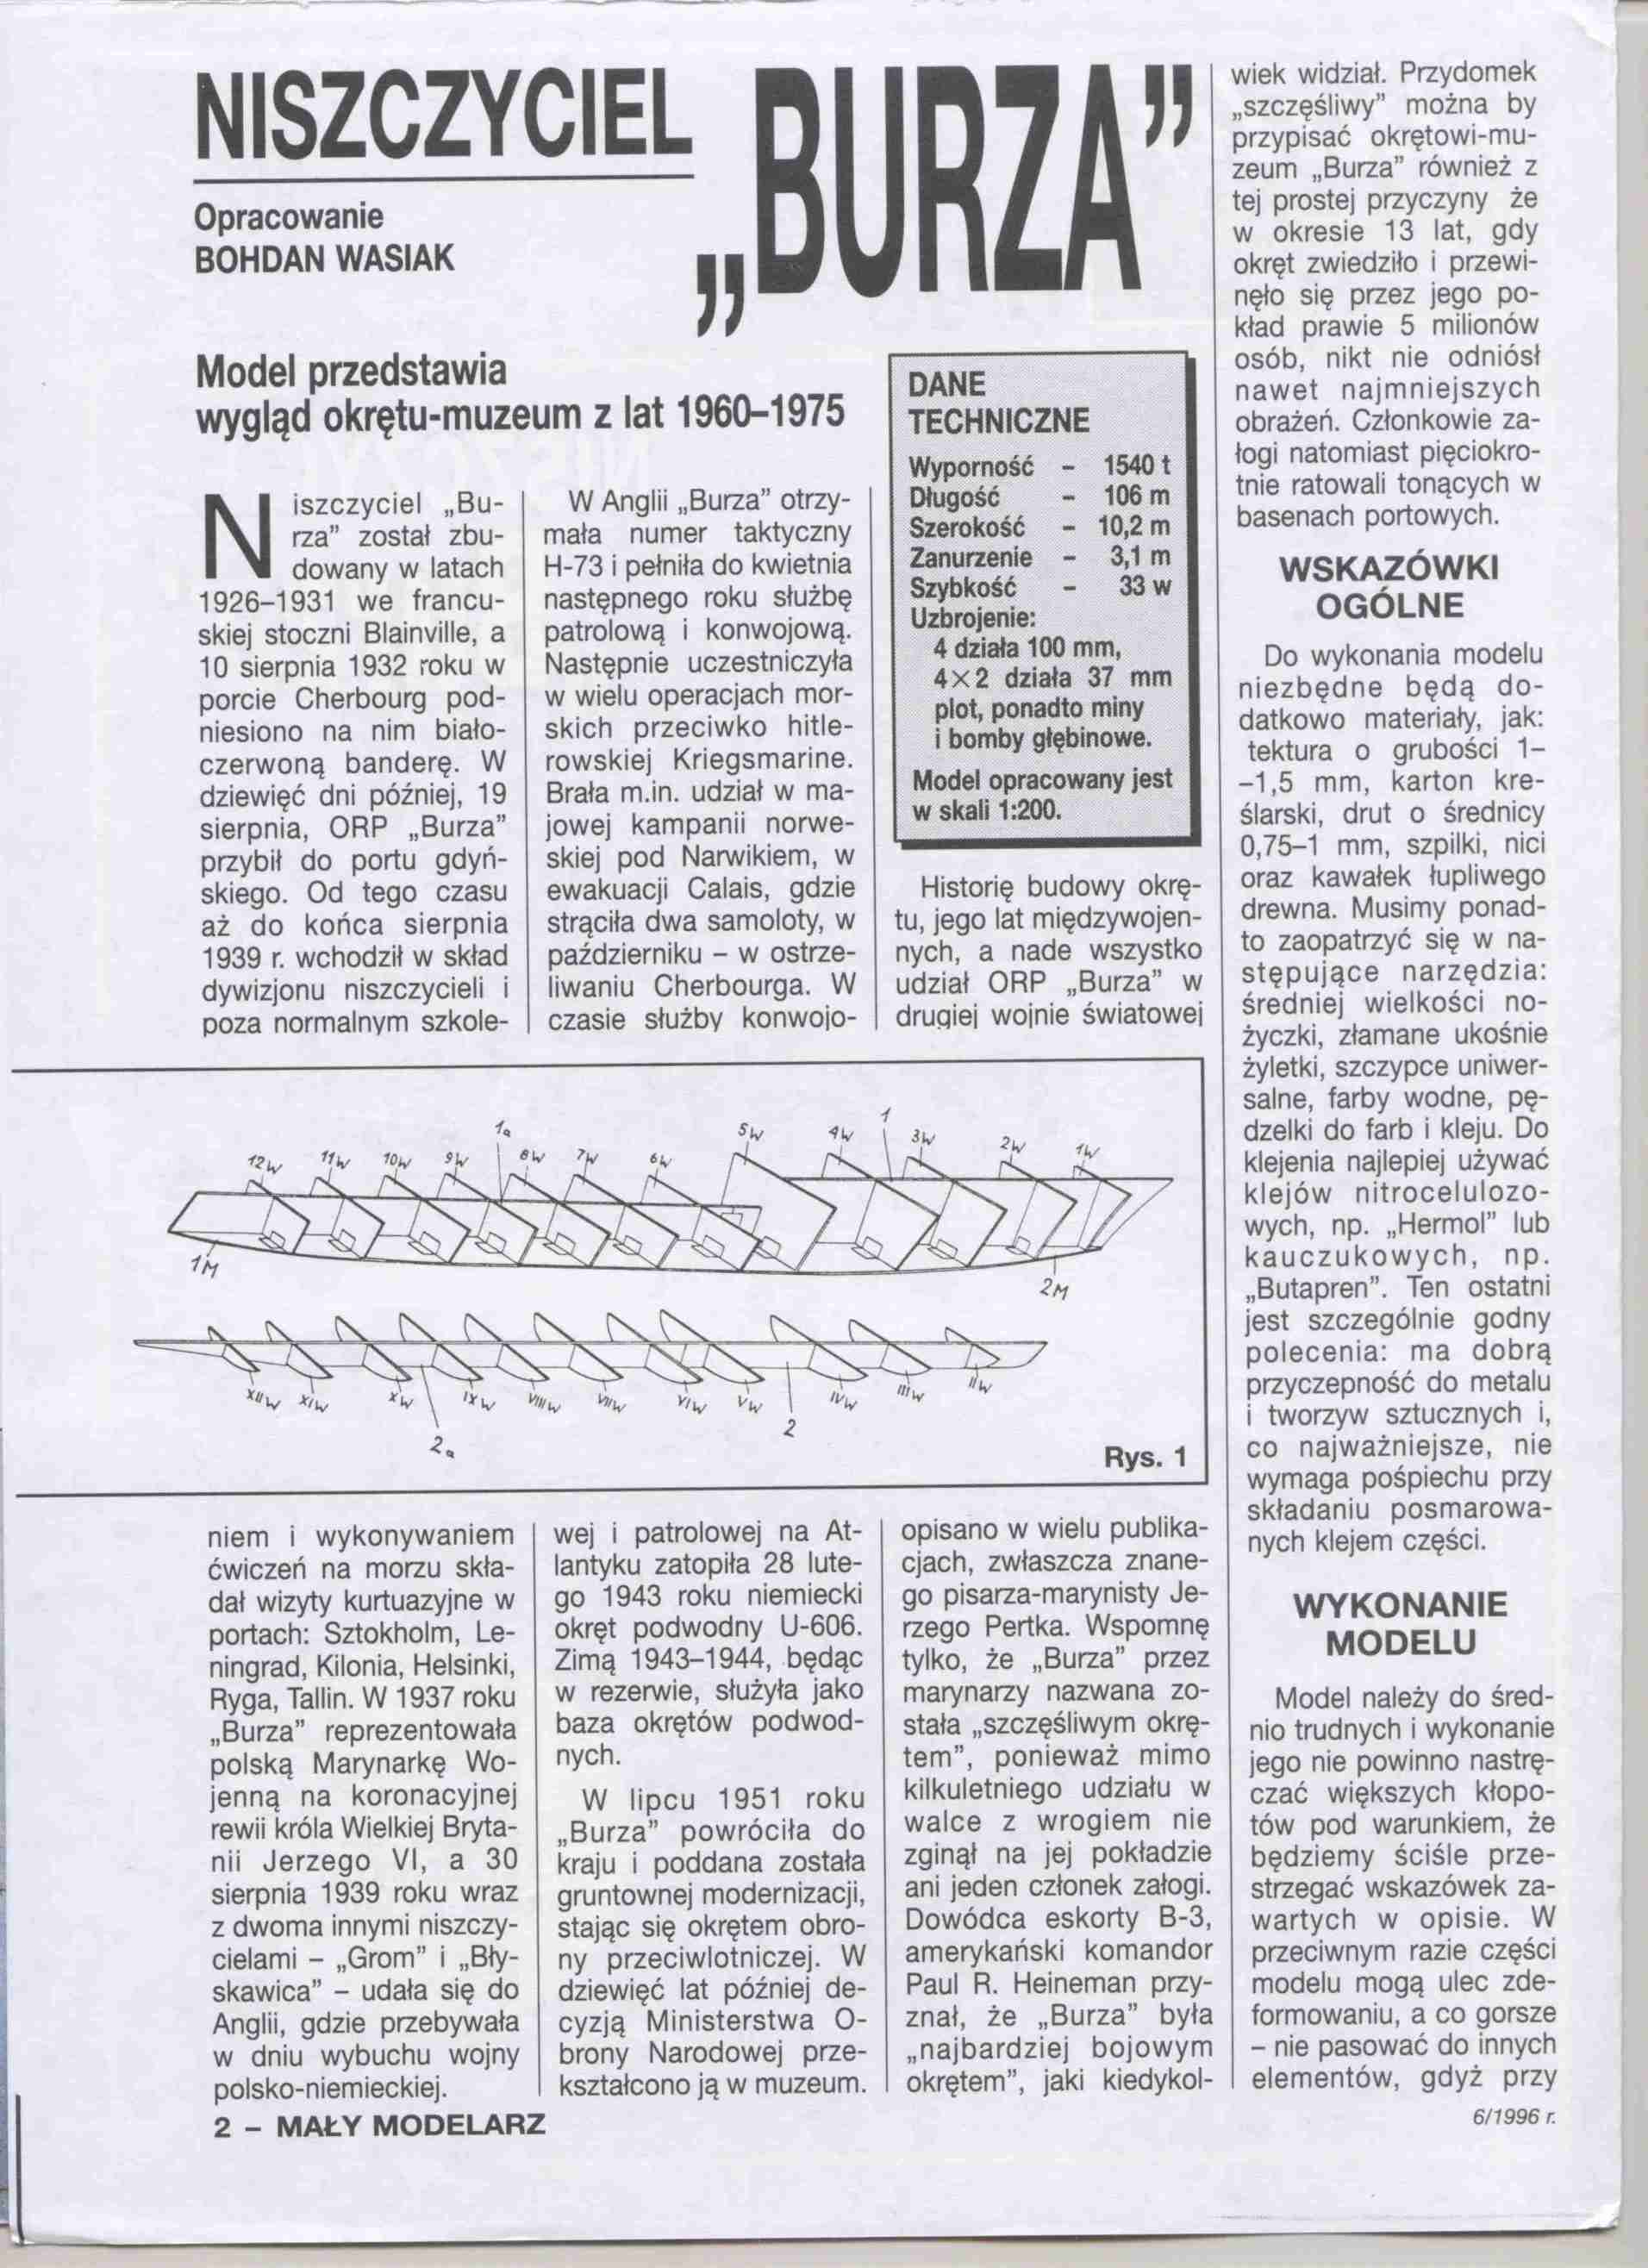 "Maly Modelarz" 6, 1996, 2 с.